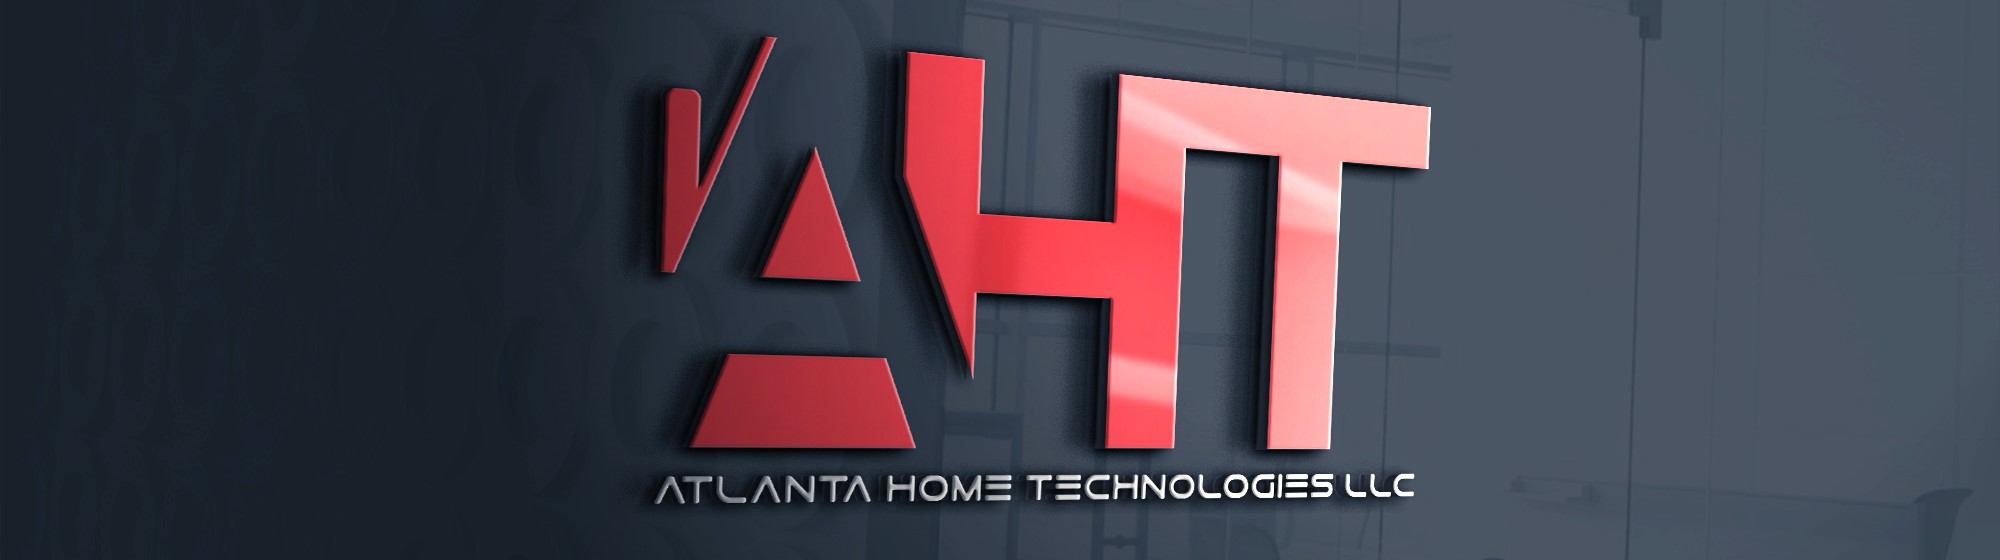 Atlanta Home Technologies, LLC Logo